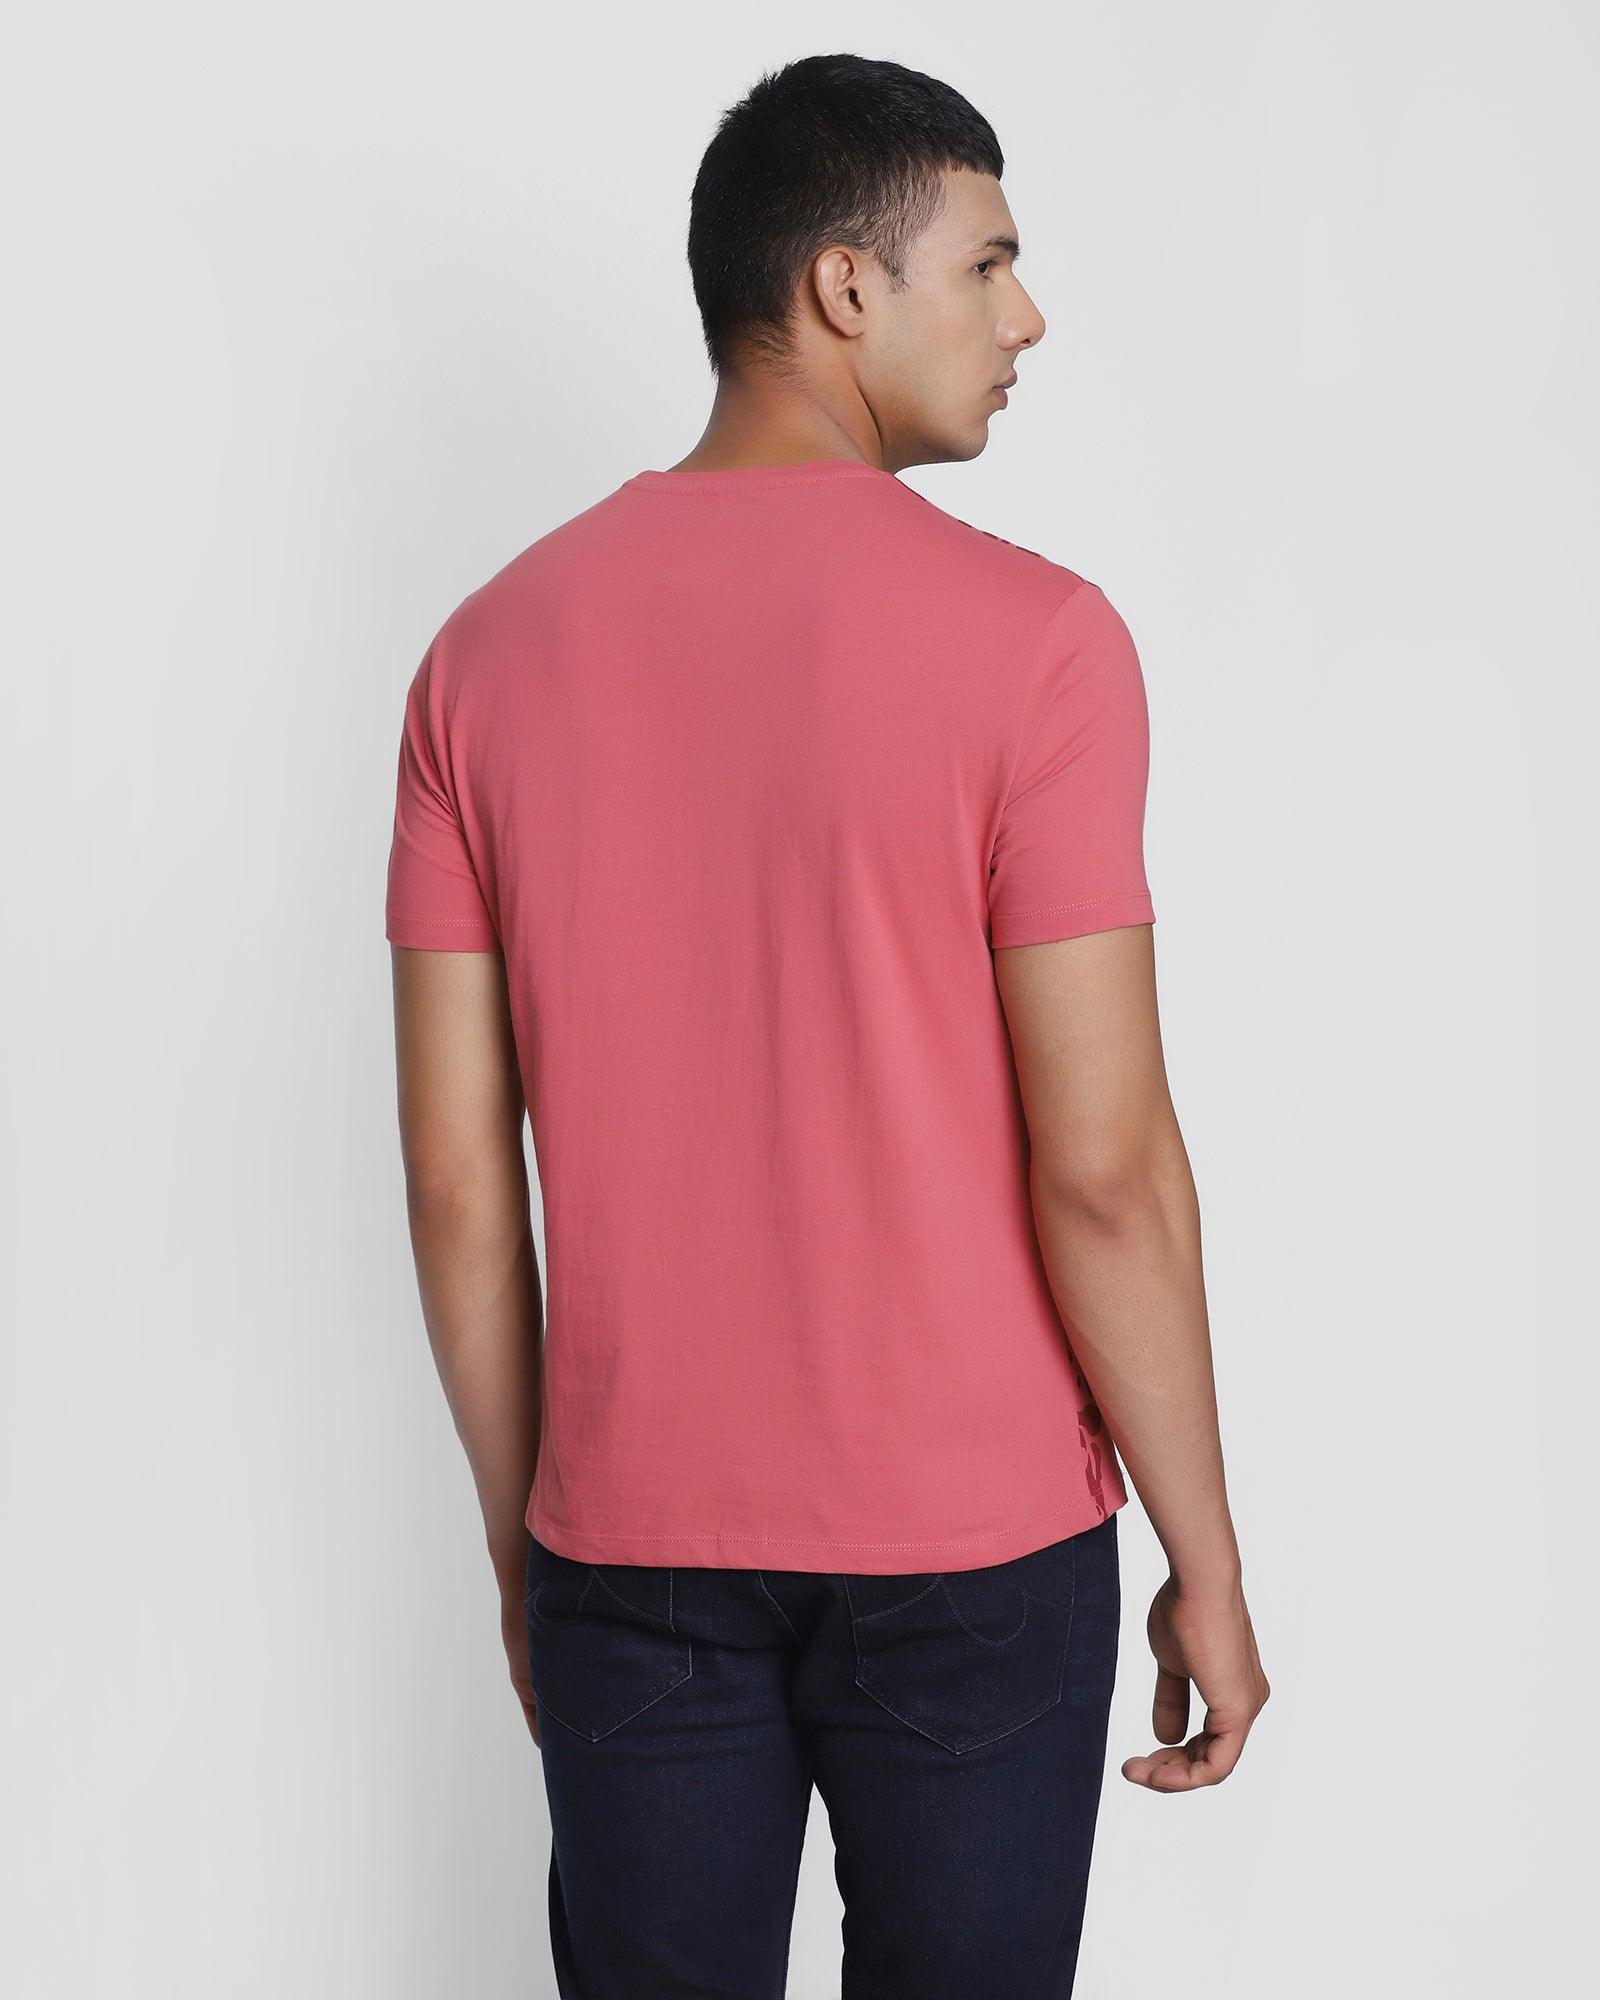 Crew Neck Pink Printed T Shirt - Adeane